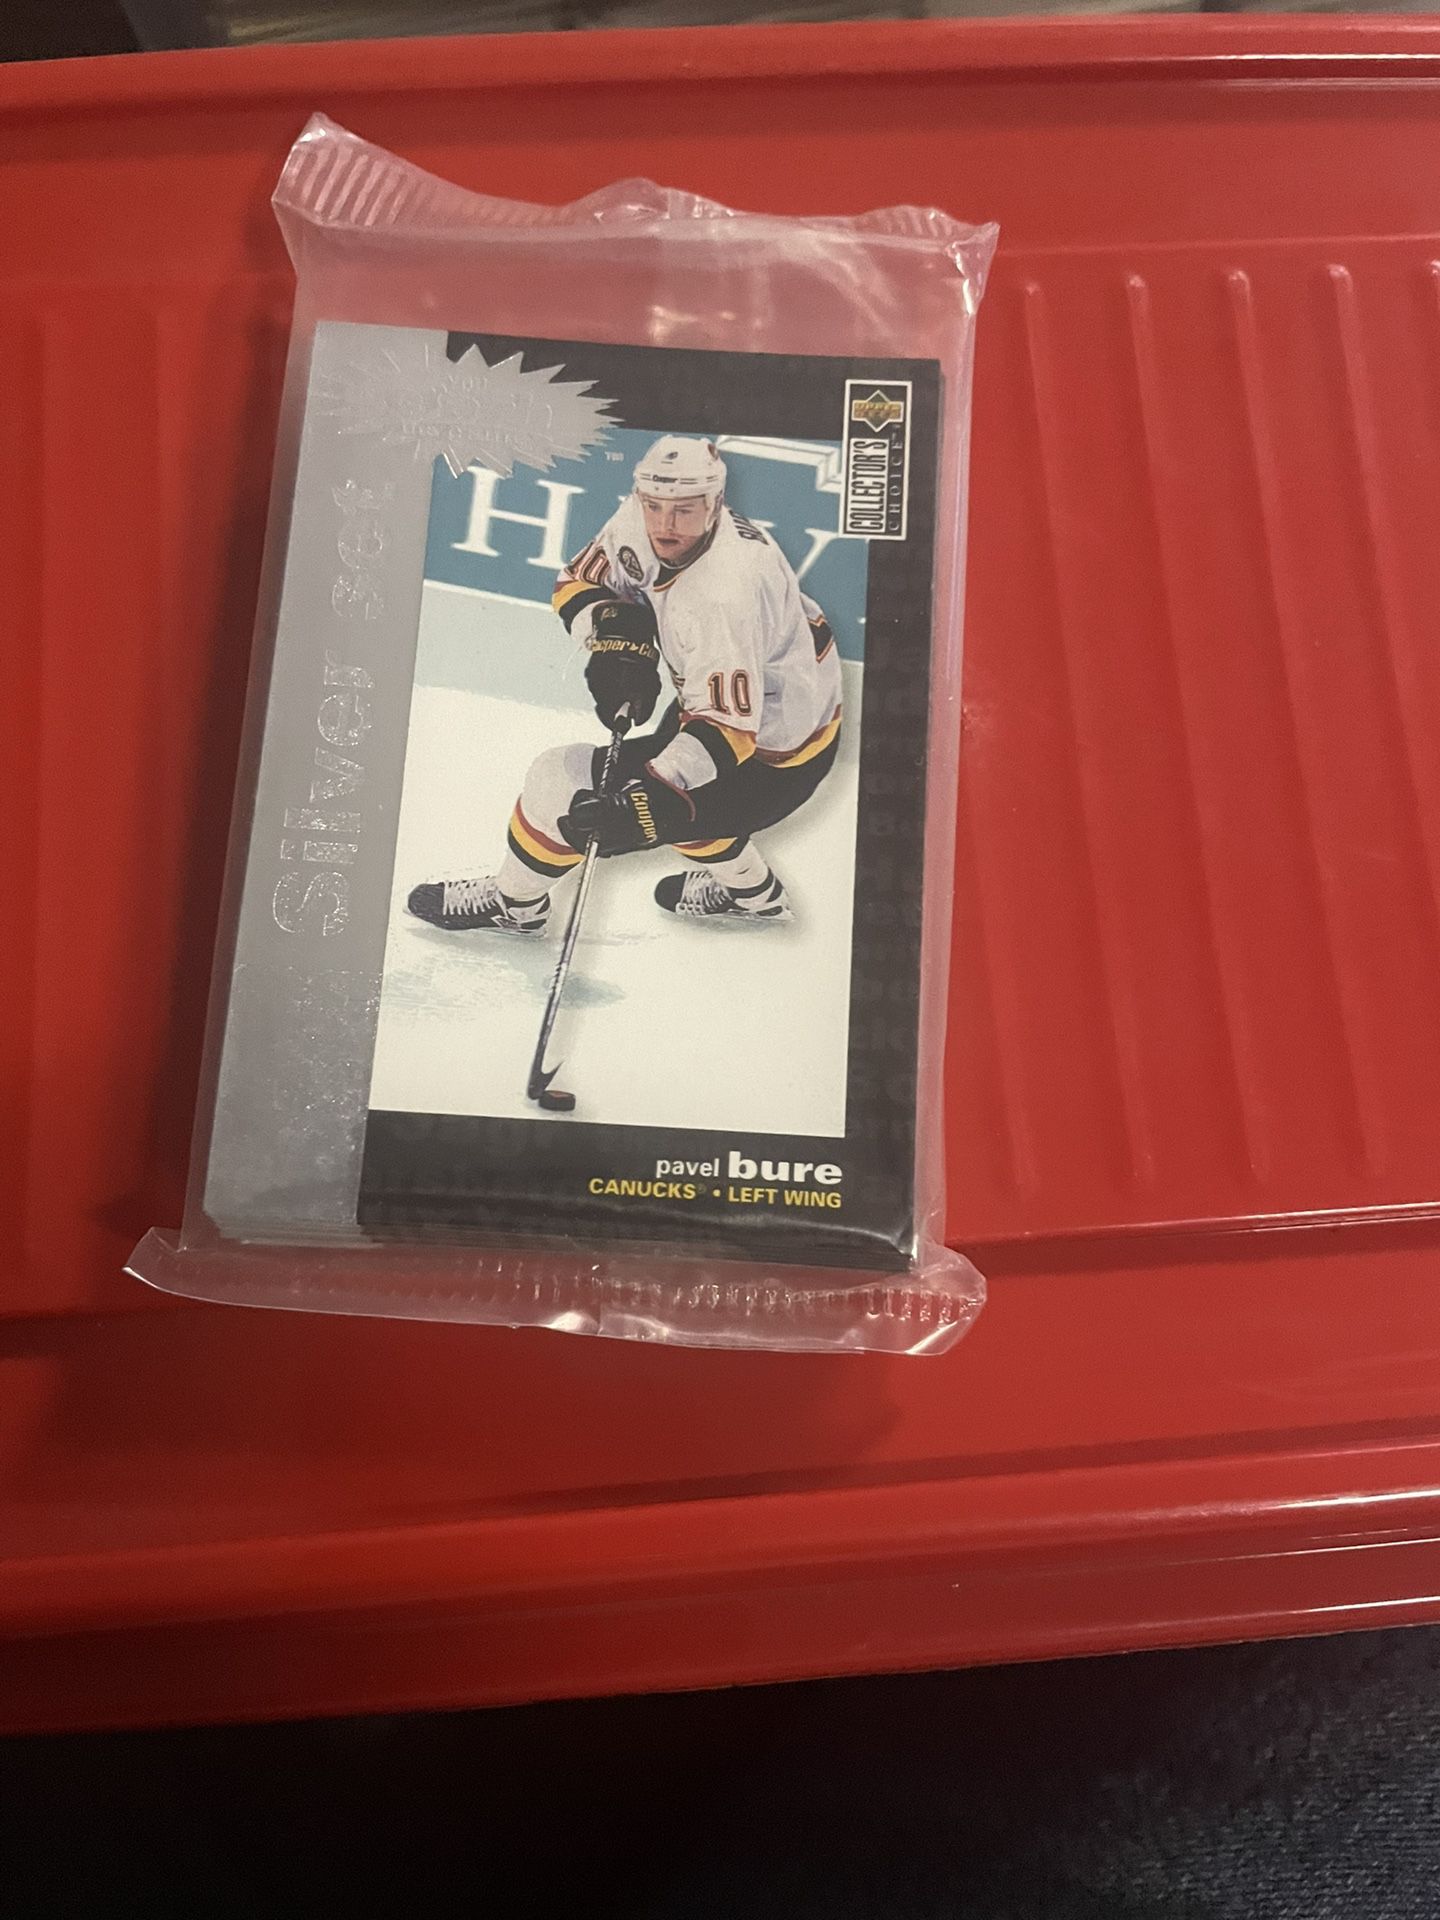 95-96 Hockey Silver Set